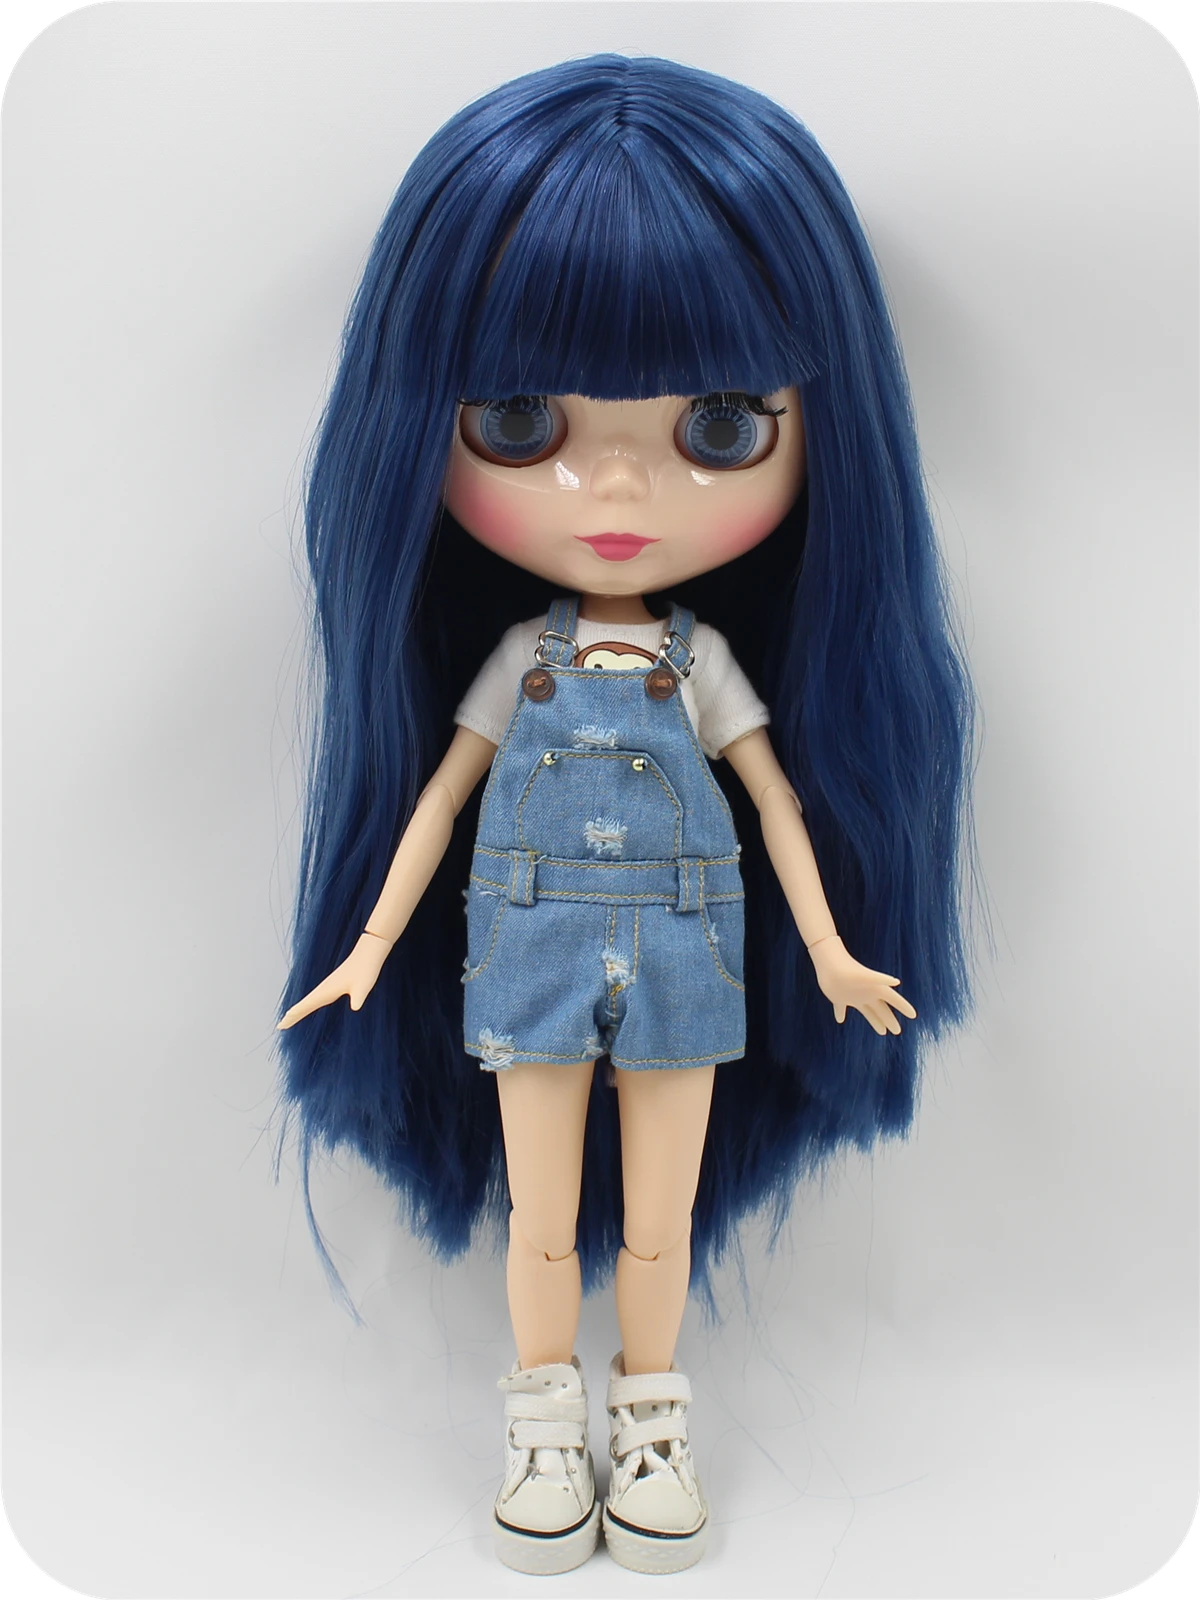 Neo Blythe 파란 머리, 자연스러운 피부, 반짝이는 귀여운 얼굴을 가진 인형 Custom 관절바디 1